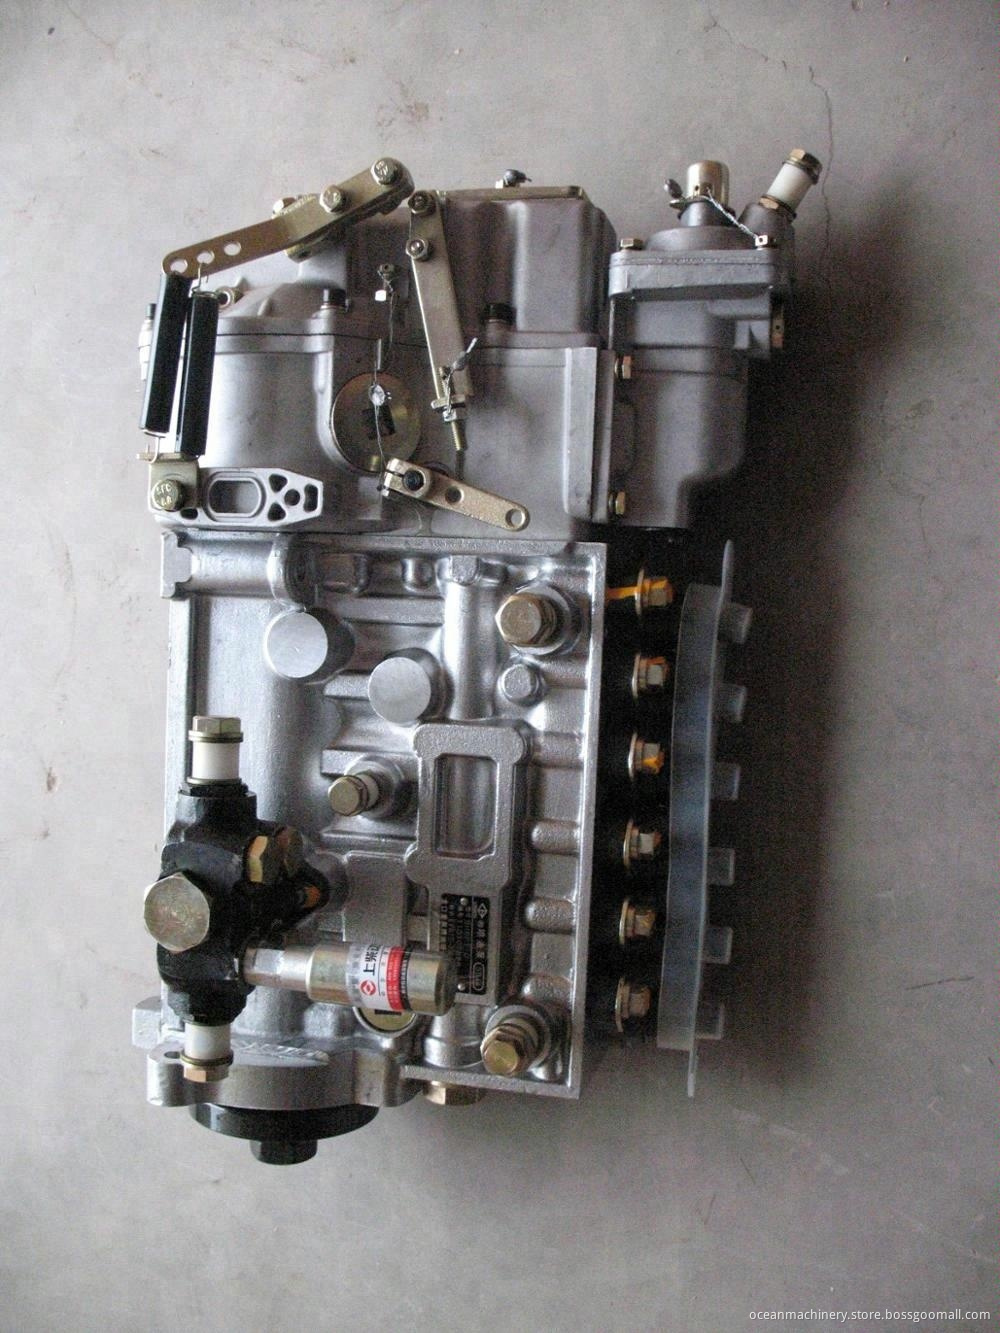 LG936  spare parts 4110000565197 steering pump